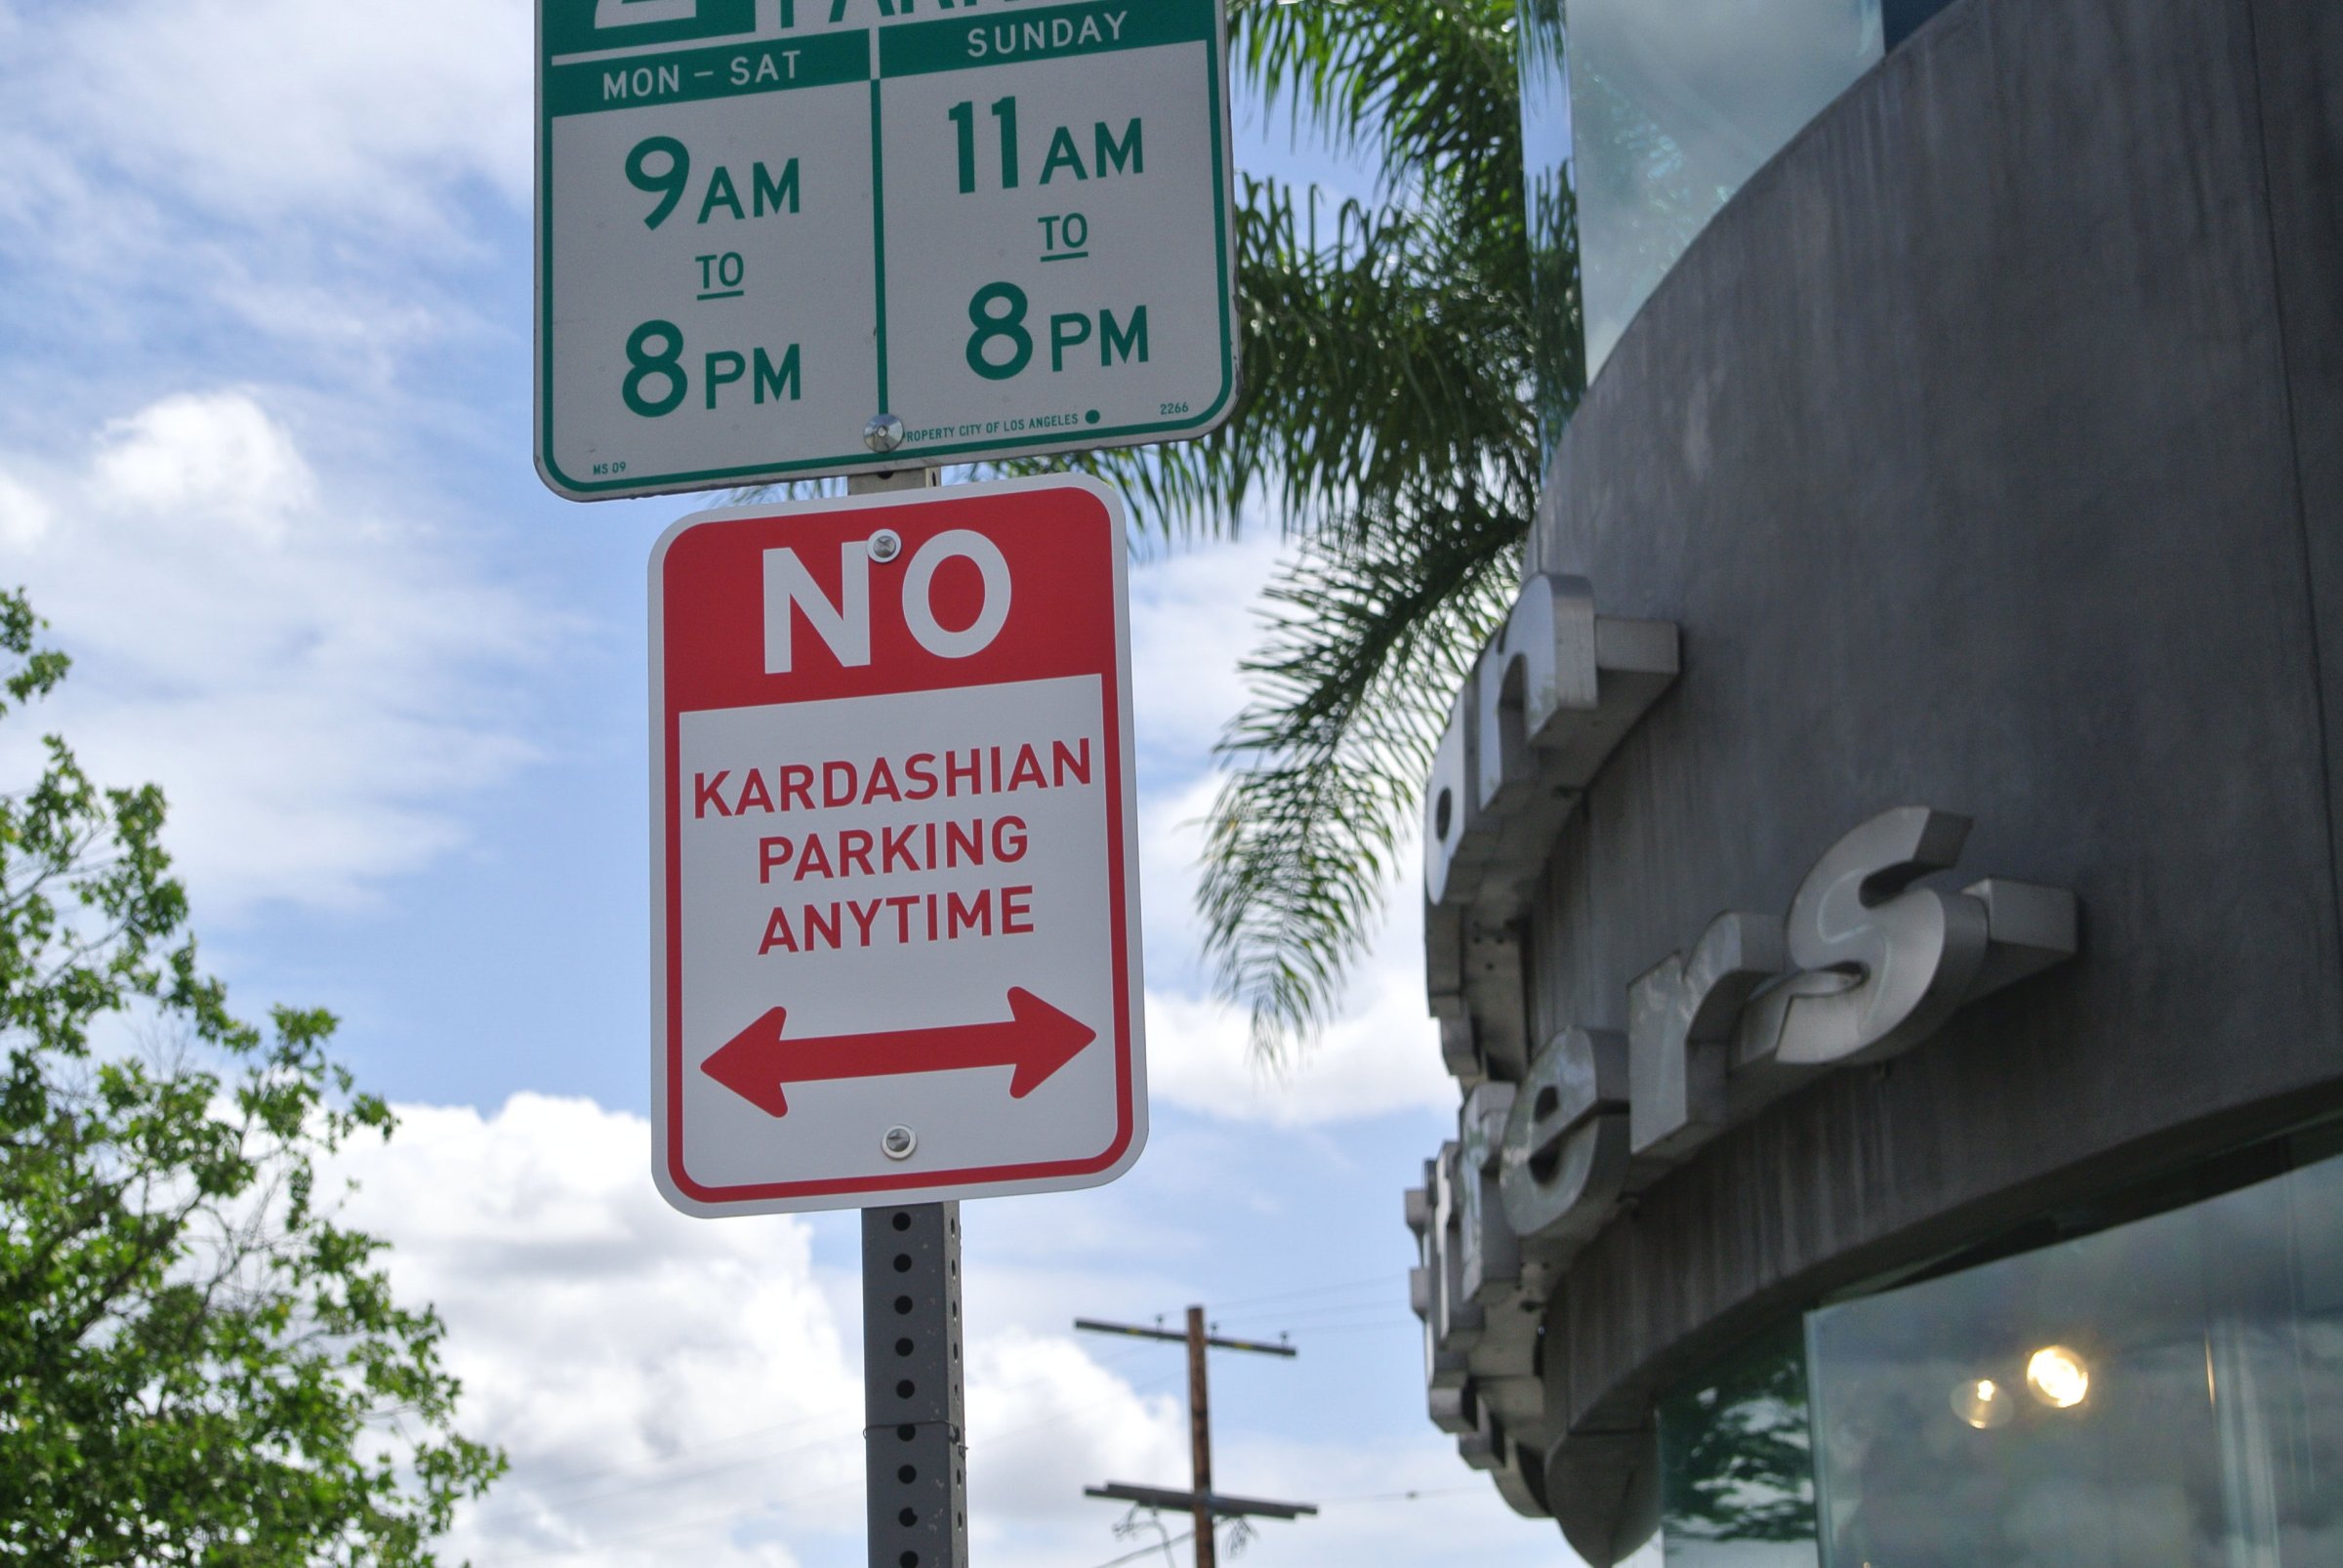 "No Kardashian Parking" sign by artist Plastic Jesus in Los Angeles, Calif.